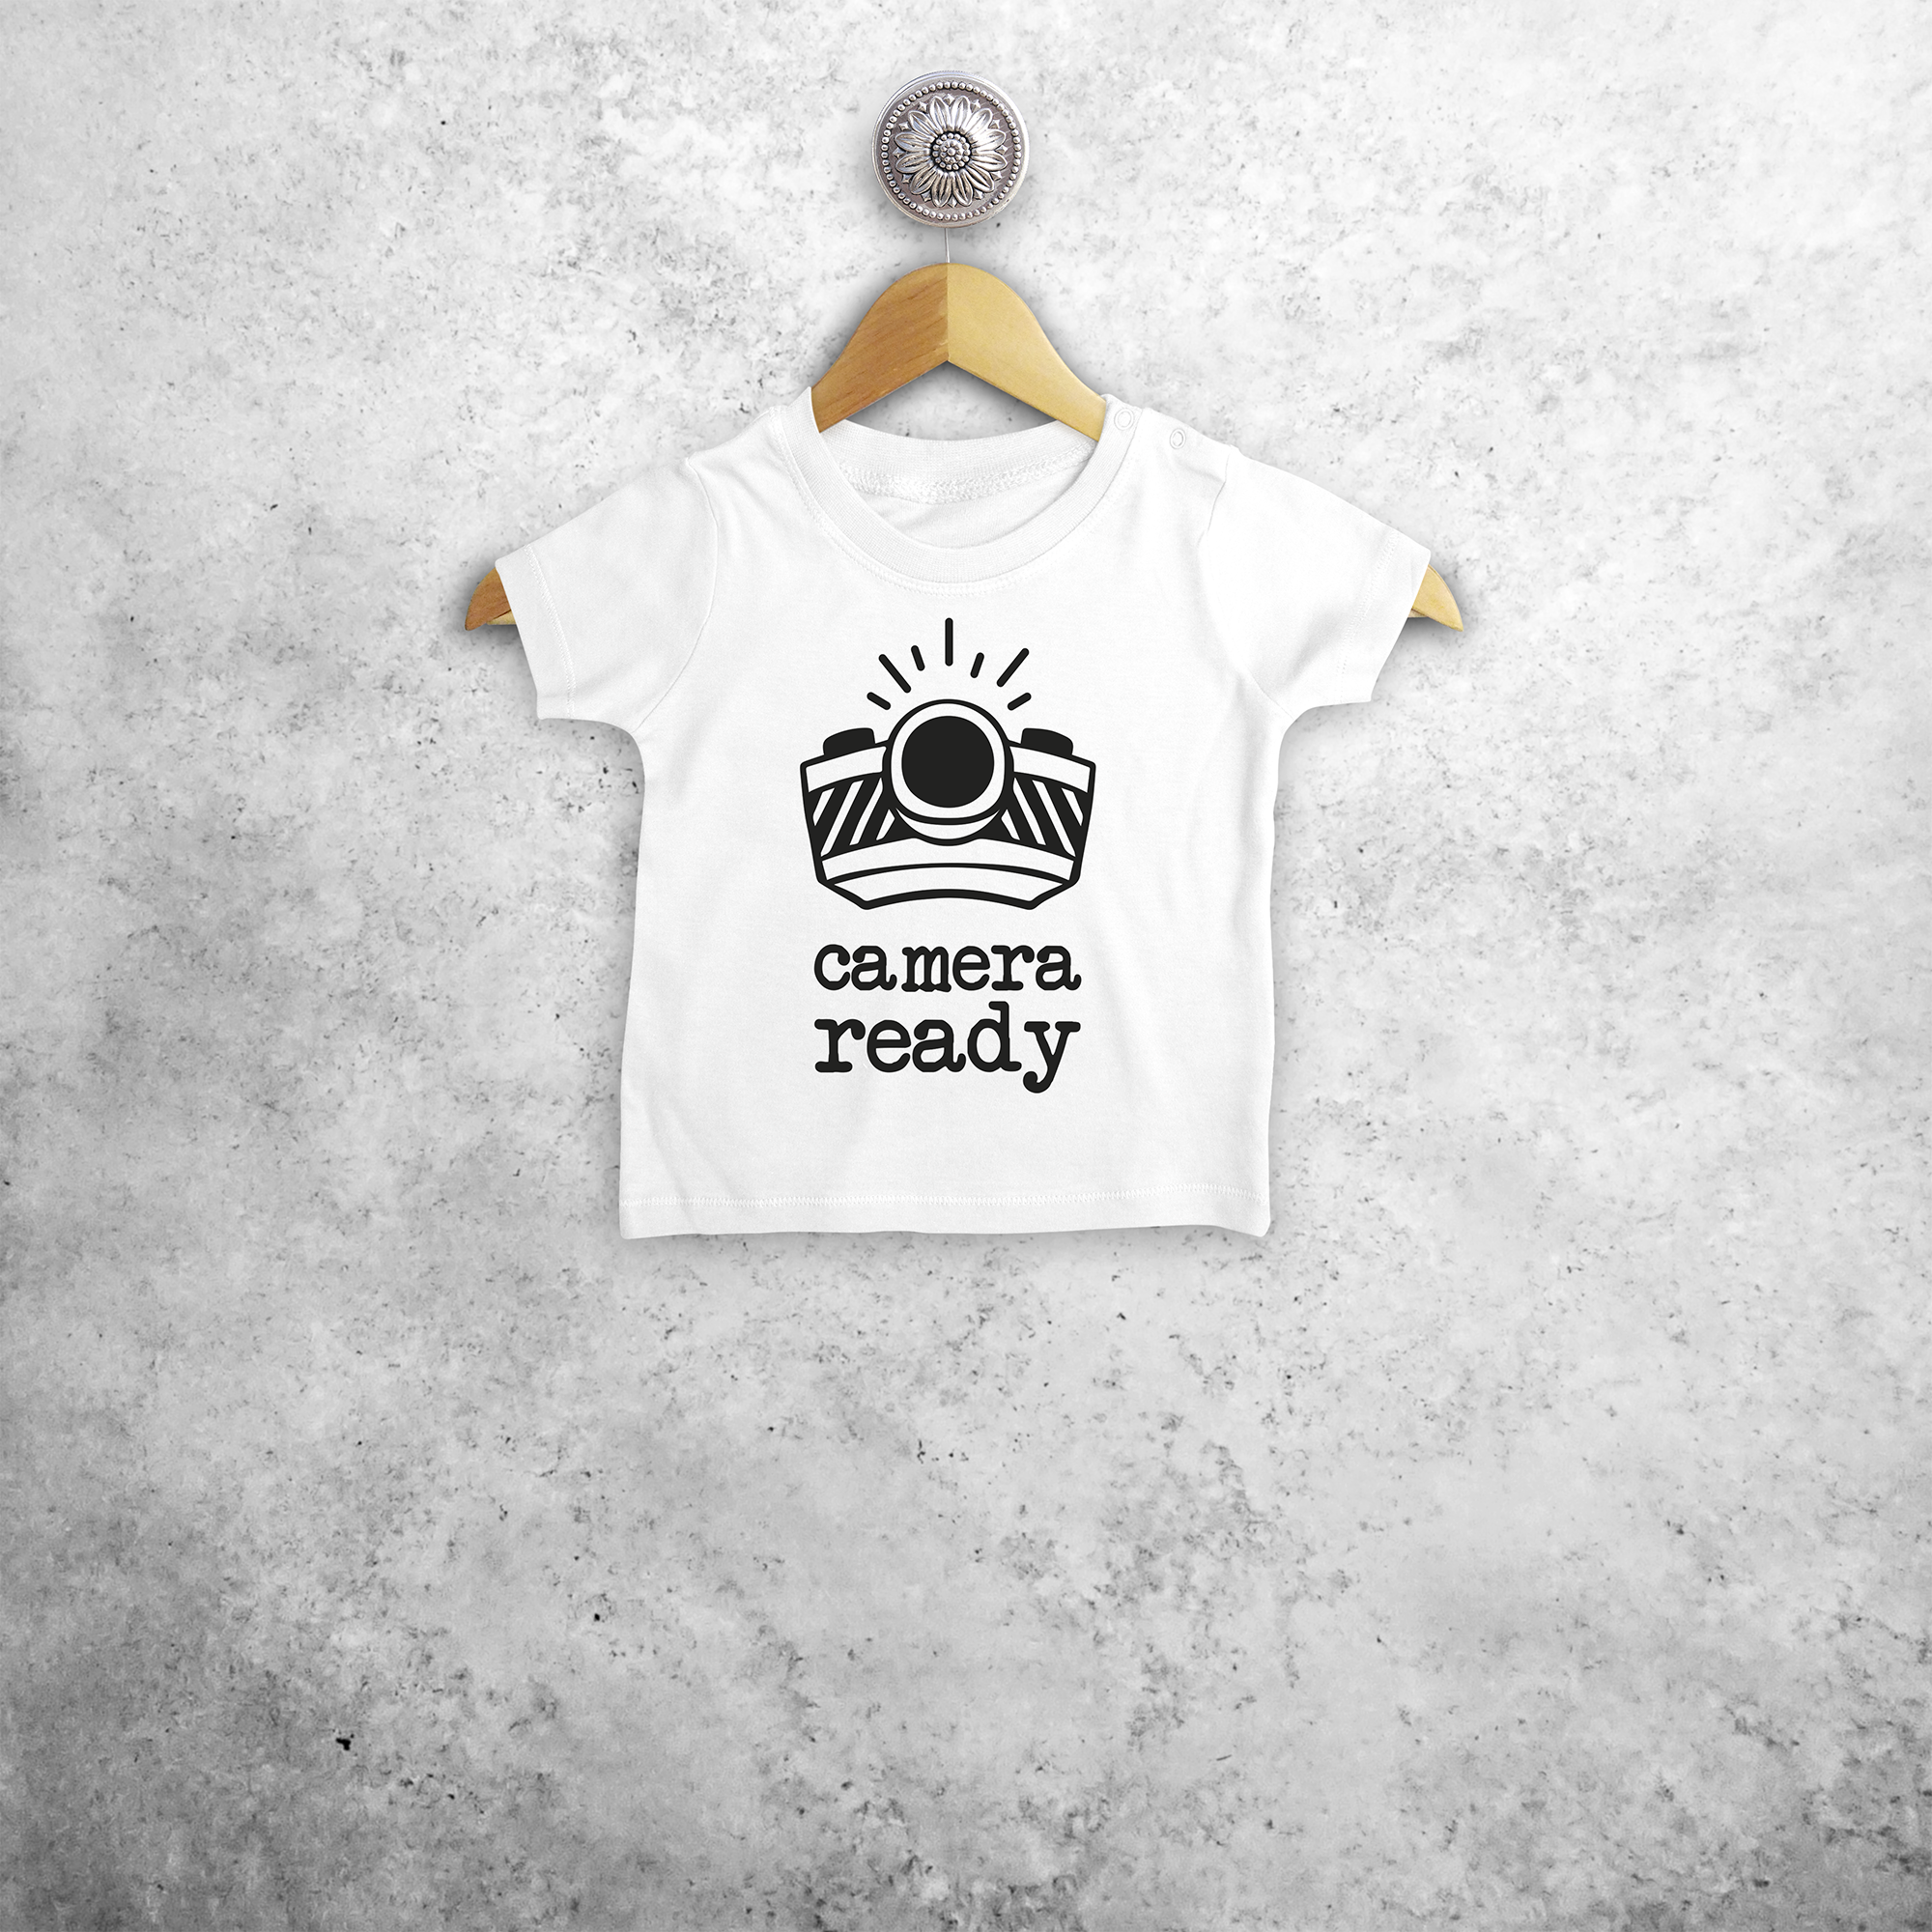 'Camera ready' baby shortsleeve shirt